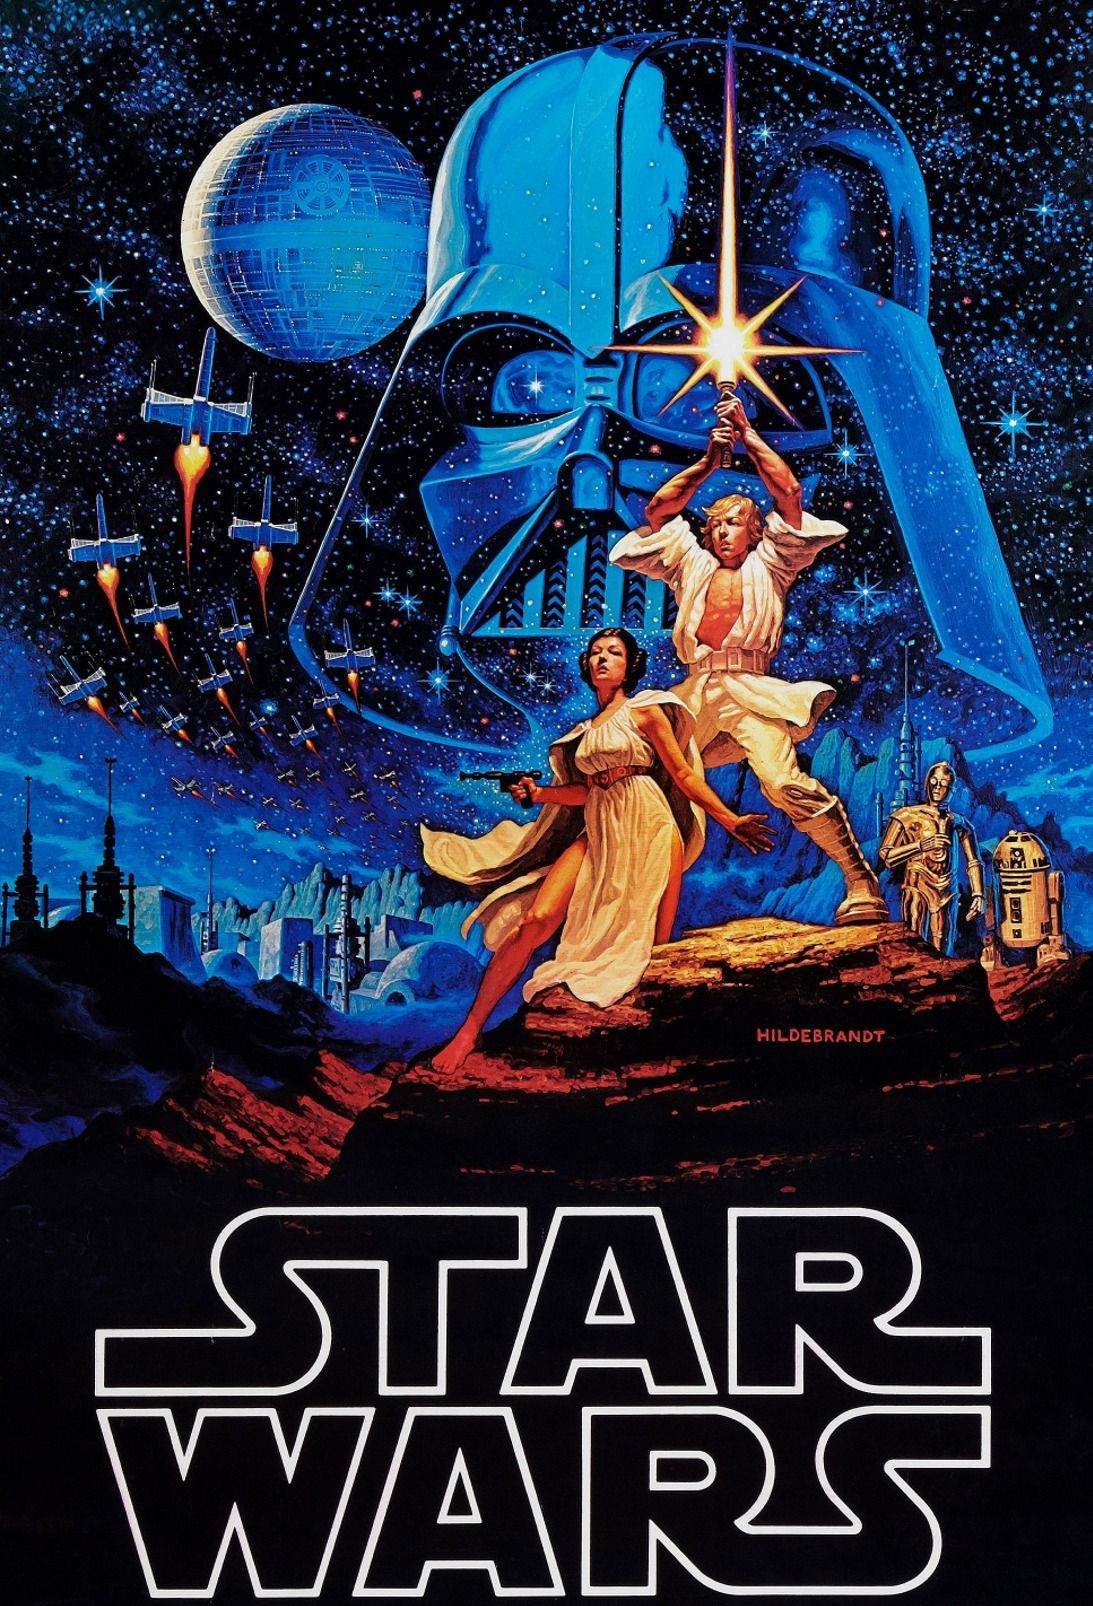 Star Wars High Resolution Wallpaper. Star wars poster, Star wars movies posters, Star wars wallpaper